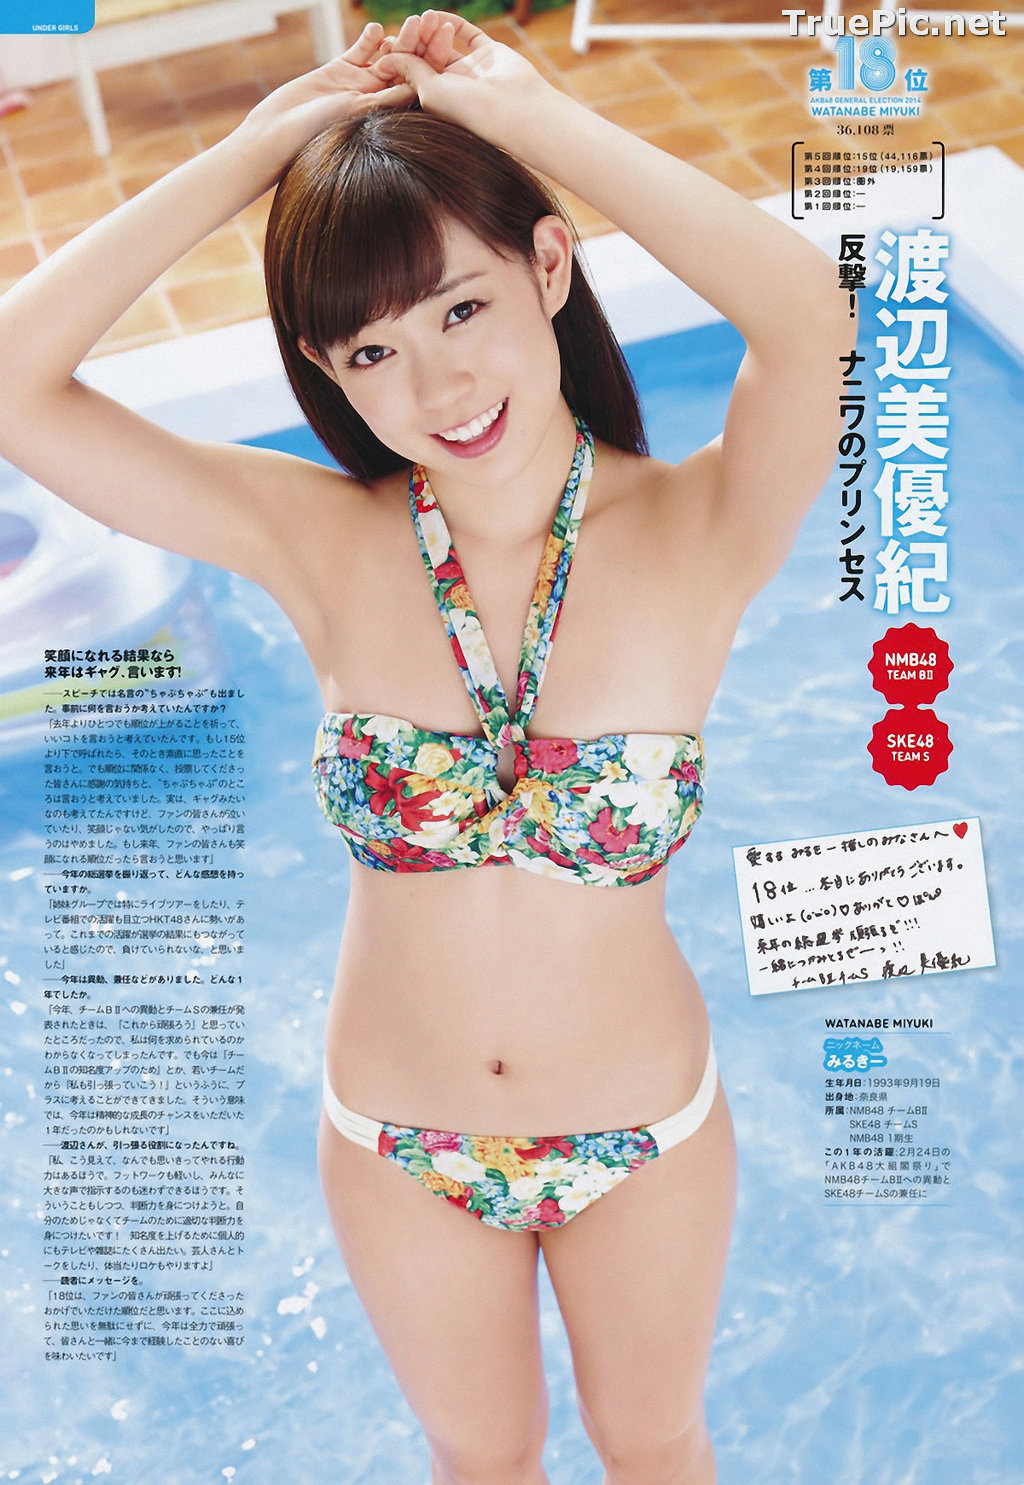 Image AKB48 General Election! Swimsuit Surprise Announcement 2014 - TruePic.net - Picture-47